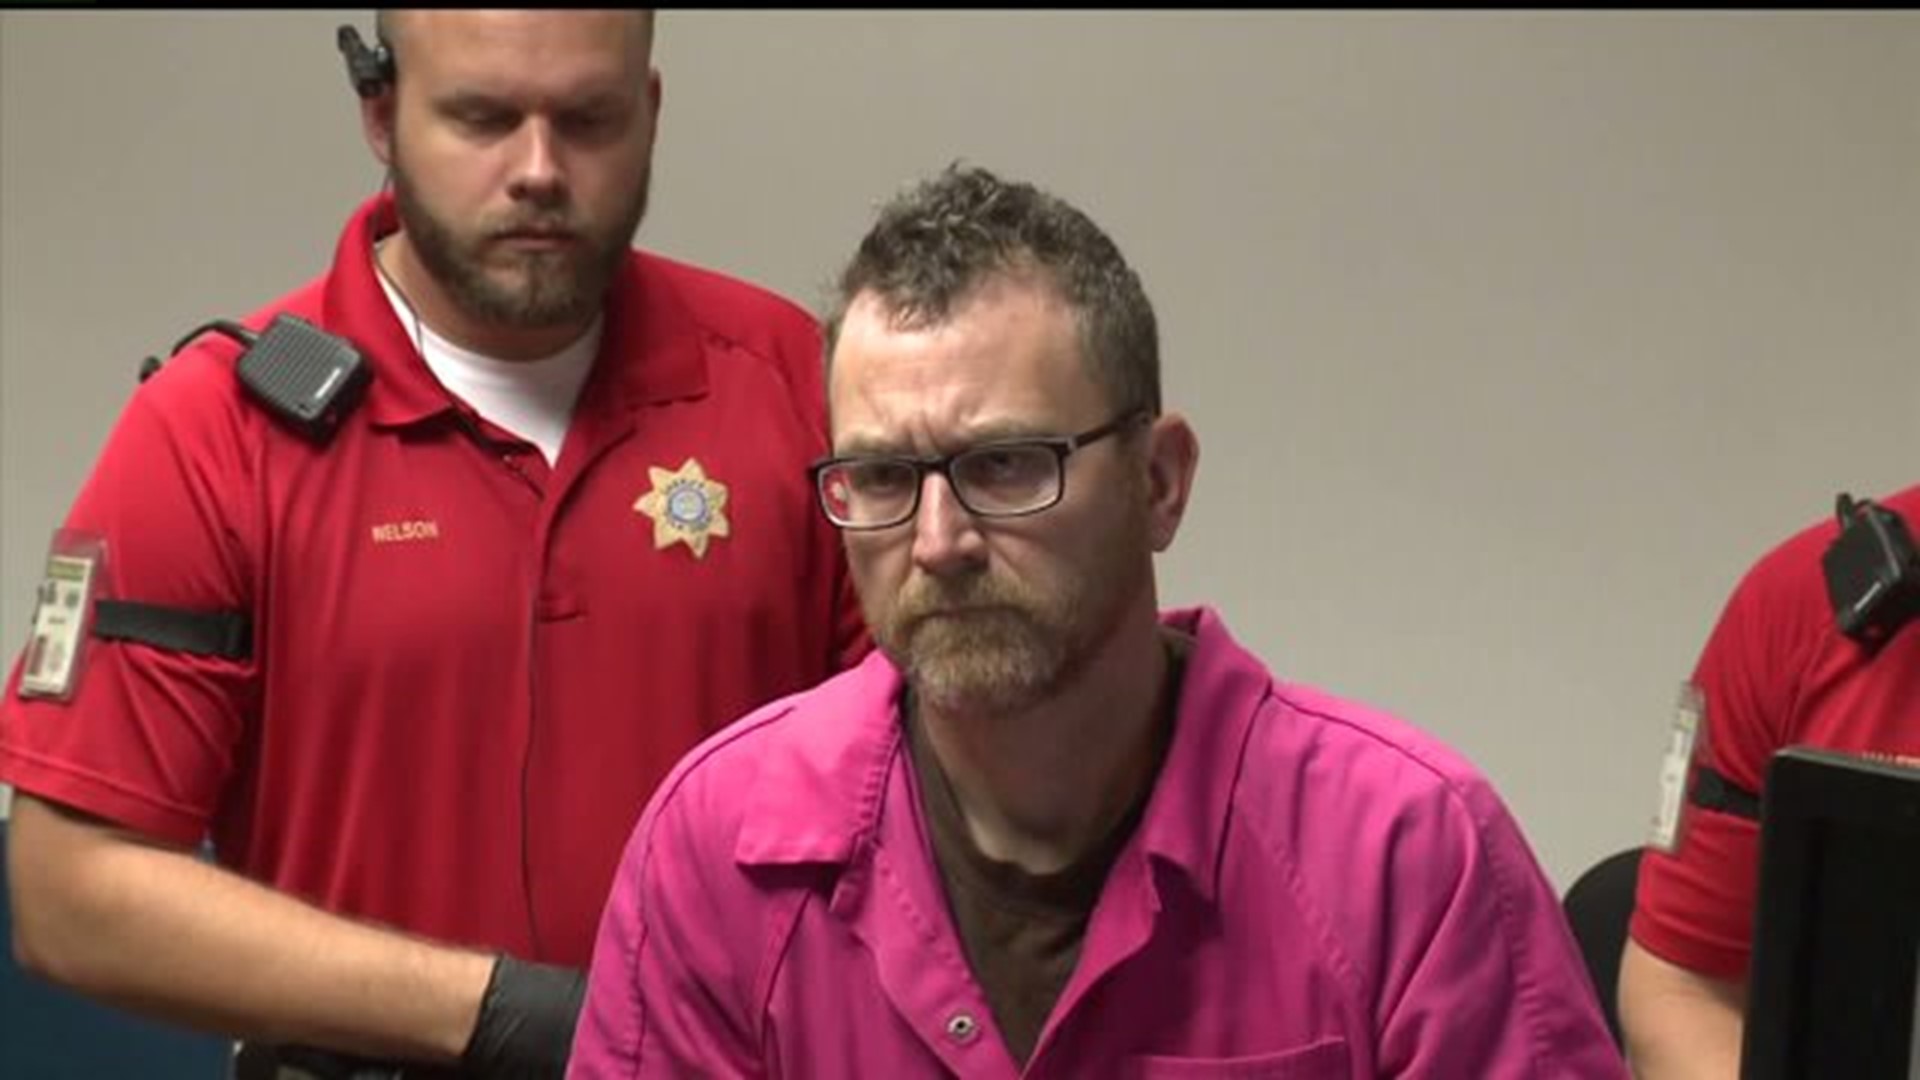 Scott Greene had thanked officers before murders